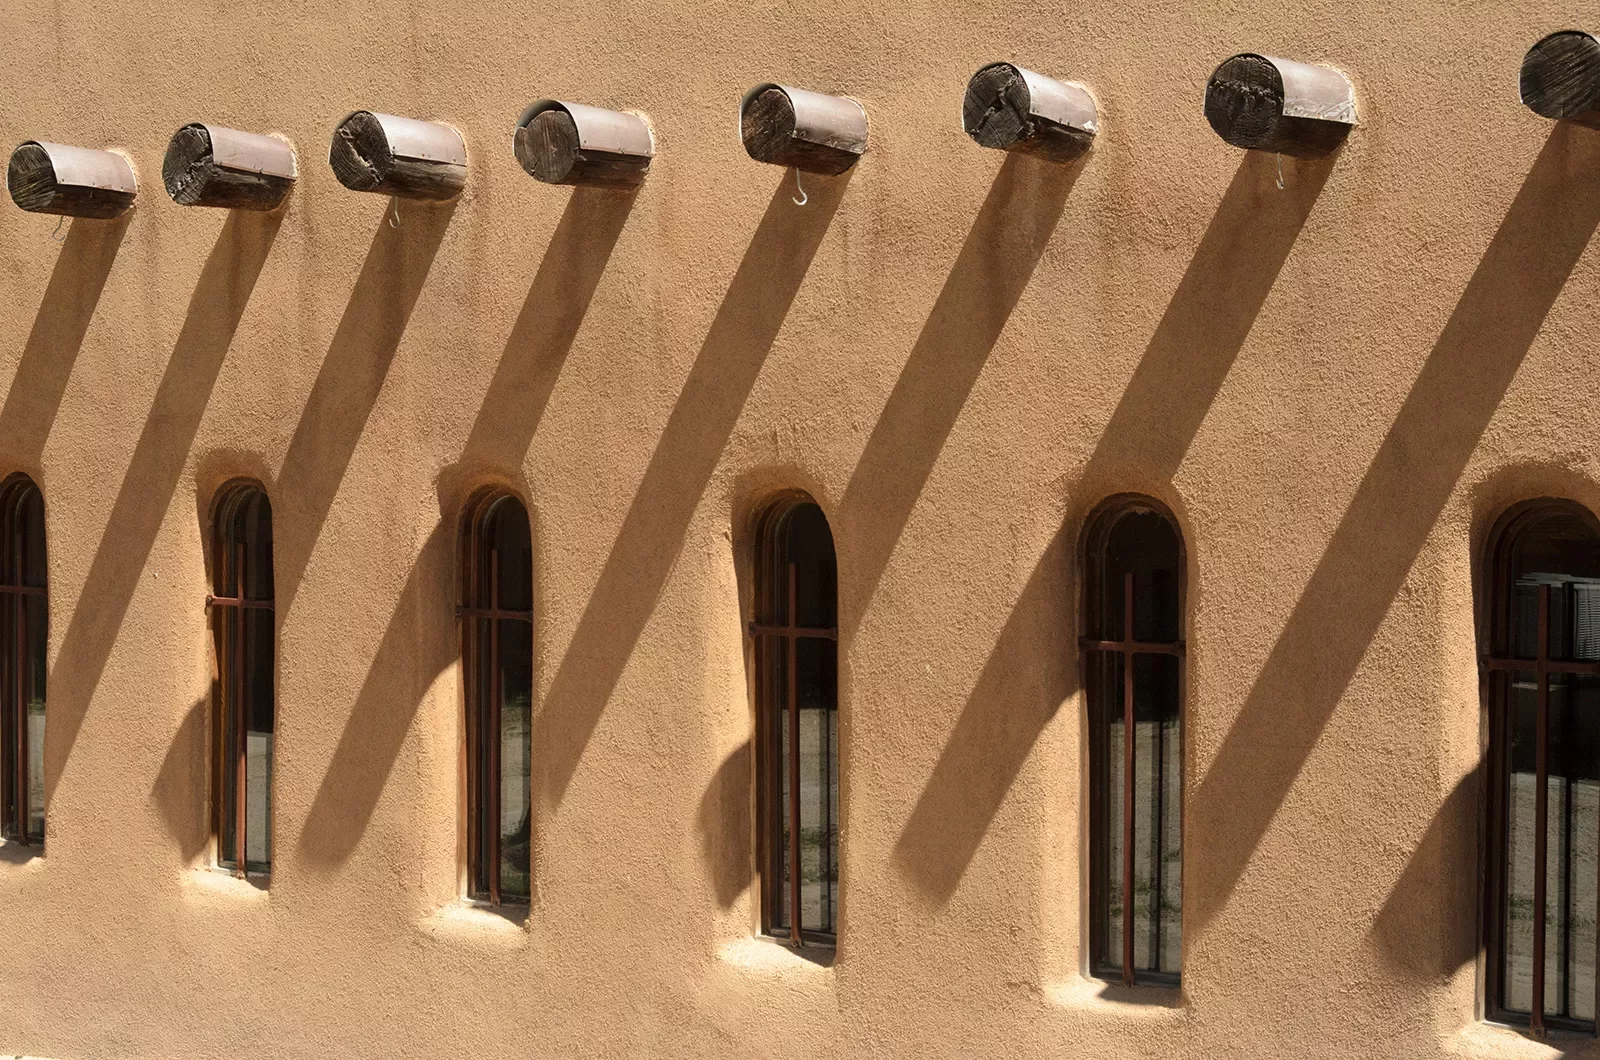 Windows of tan building shot